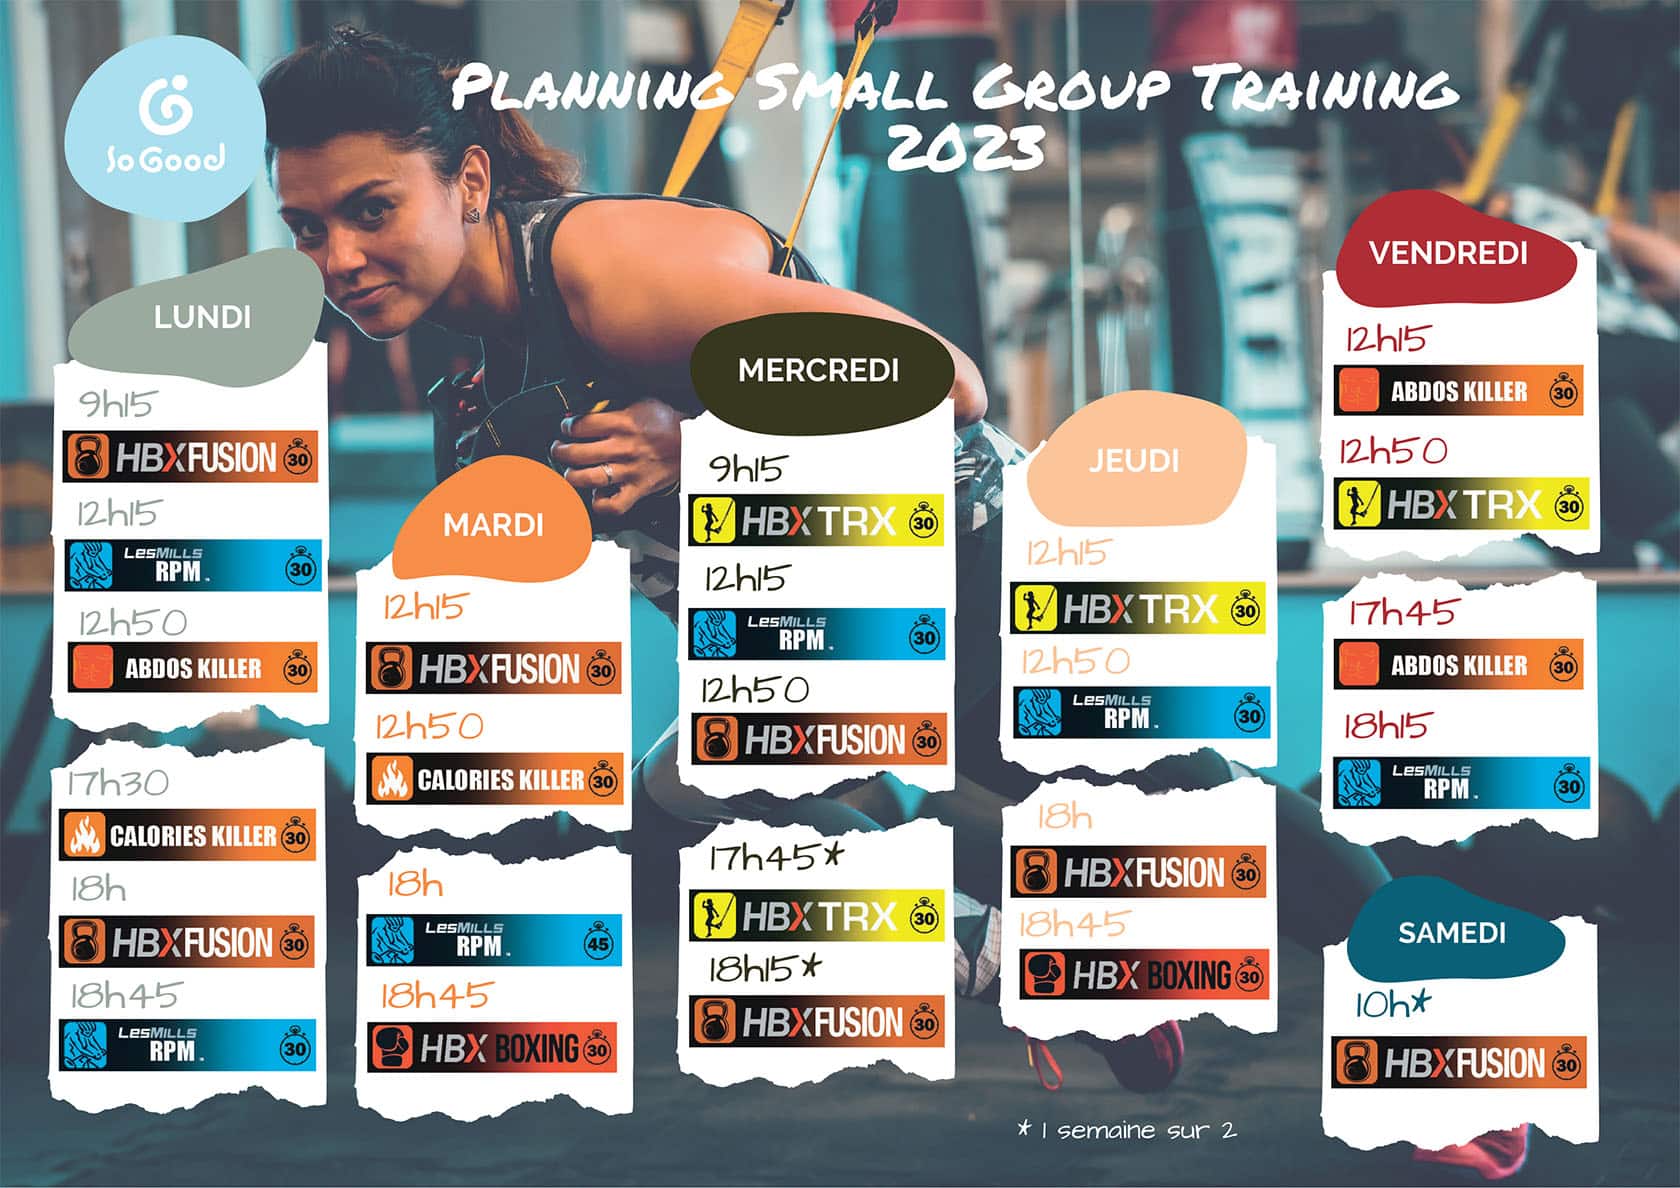 Planning Sanary 2023 - Small Group Training